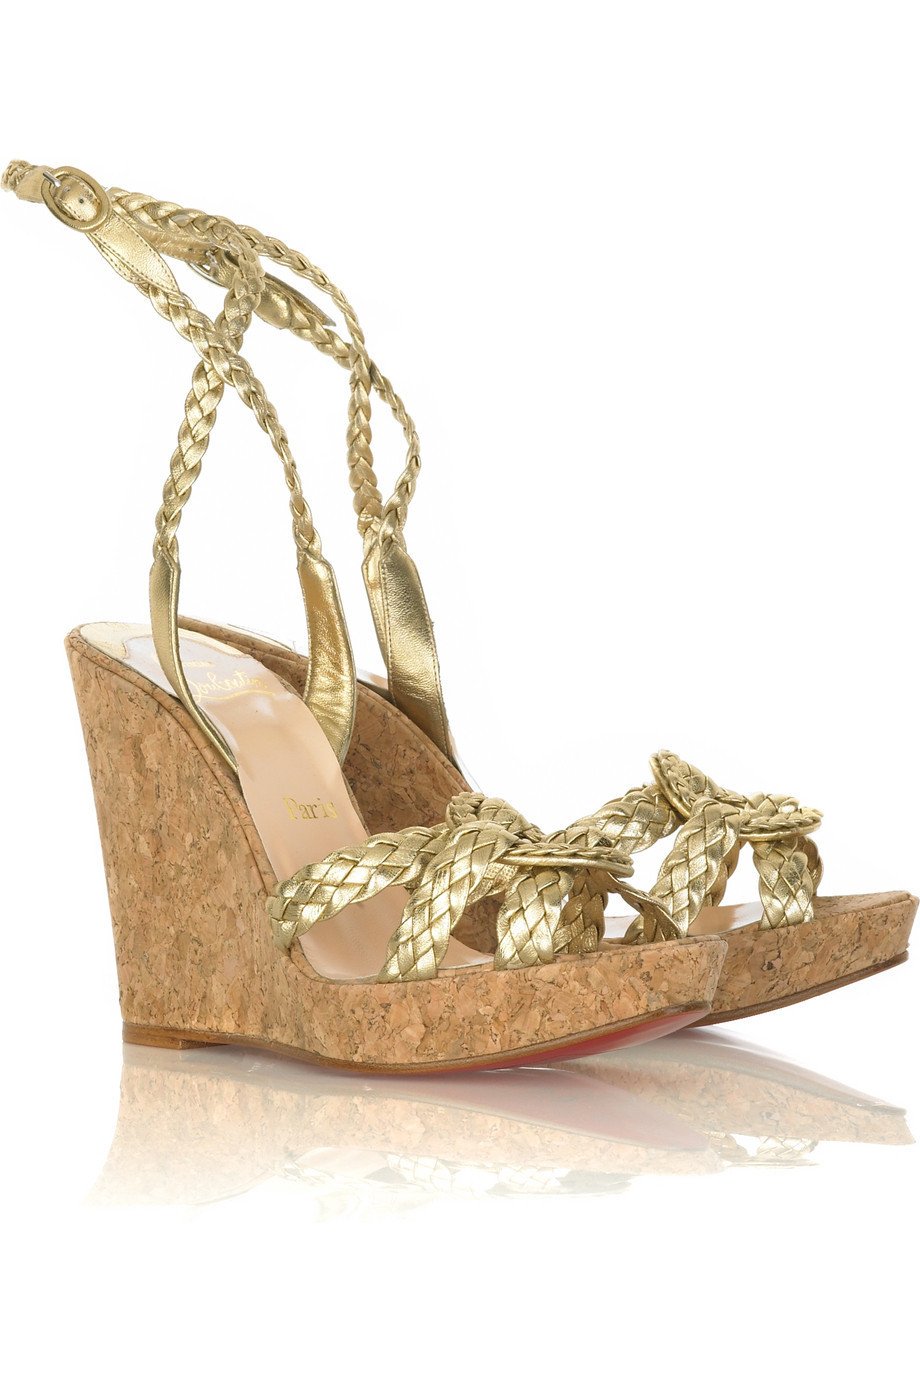 Christian Louboutin Marilou Zeppa Wedge Sandals in Gold.jpg